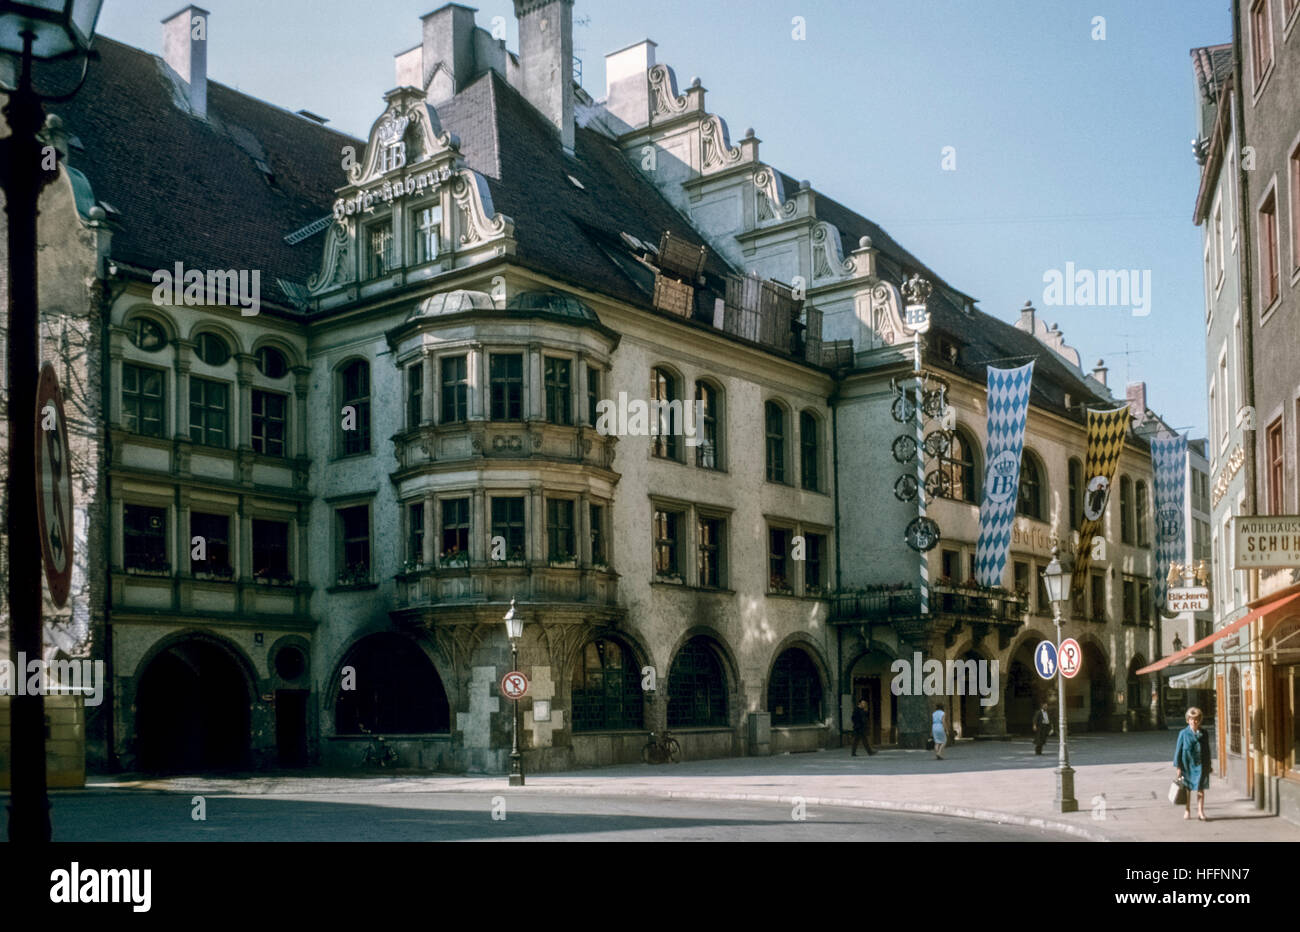 La famosa Hofbräuhaus am Platzl a Monaco di Baviera negli anni sessanta Das Münchner Hofbräuhaus am Platzl von der Nordseite um 1965 Foto Stock